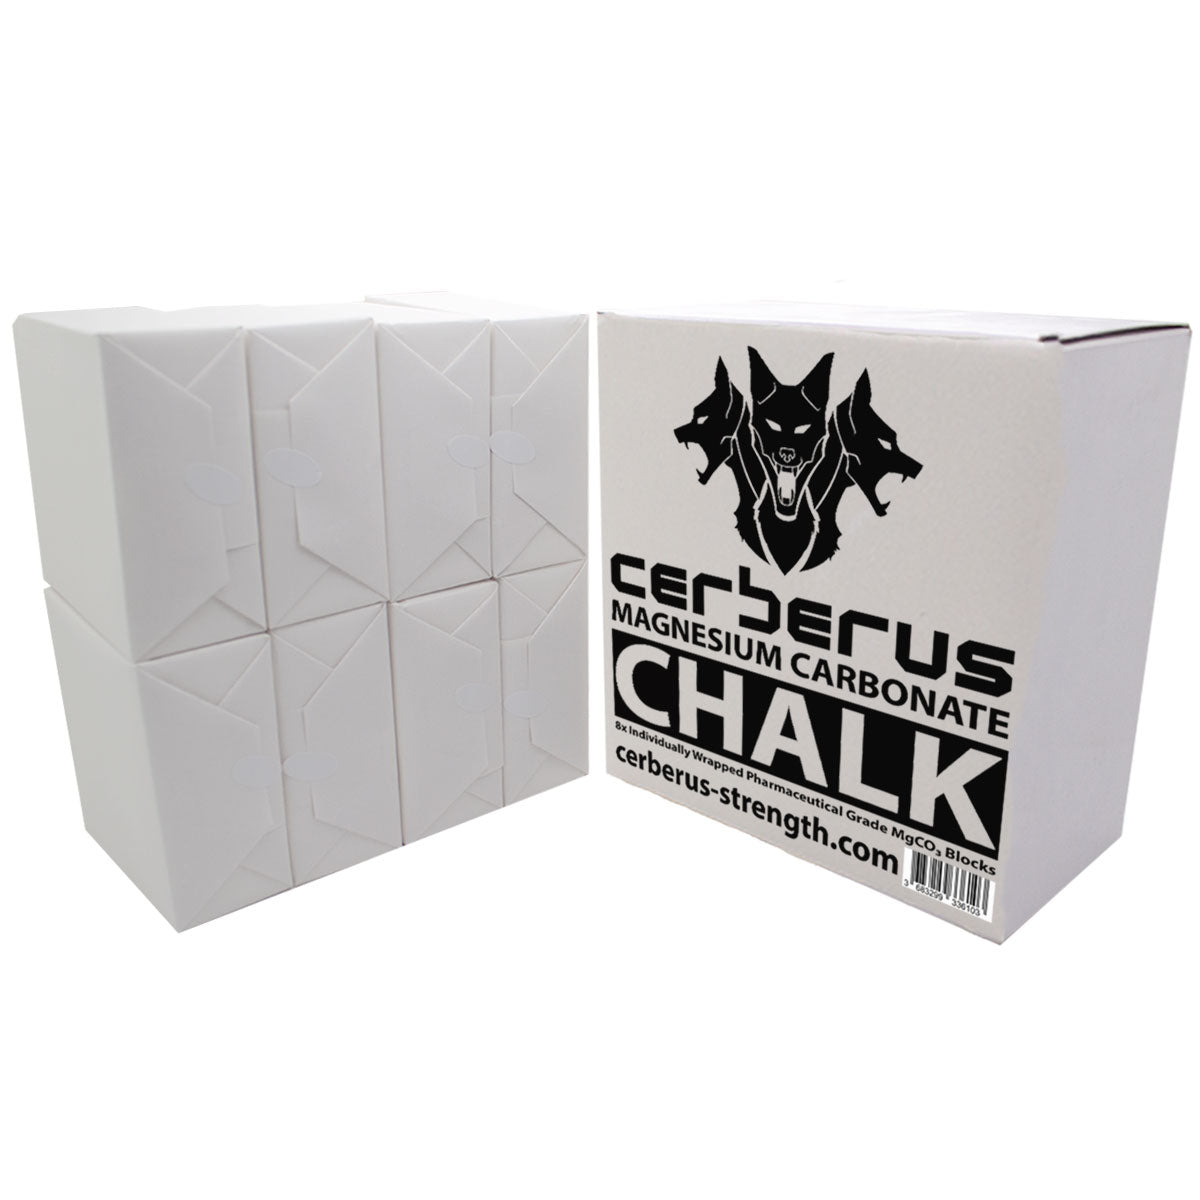 Magnesium Gym Chalk Blocks - Eight 2 oz. Blocks (1 lb.) | Apollo Athletics  (G-CHK)